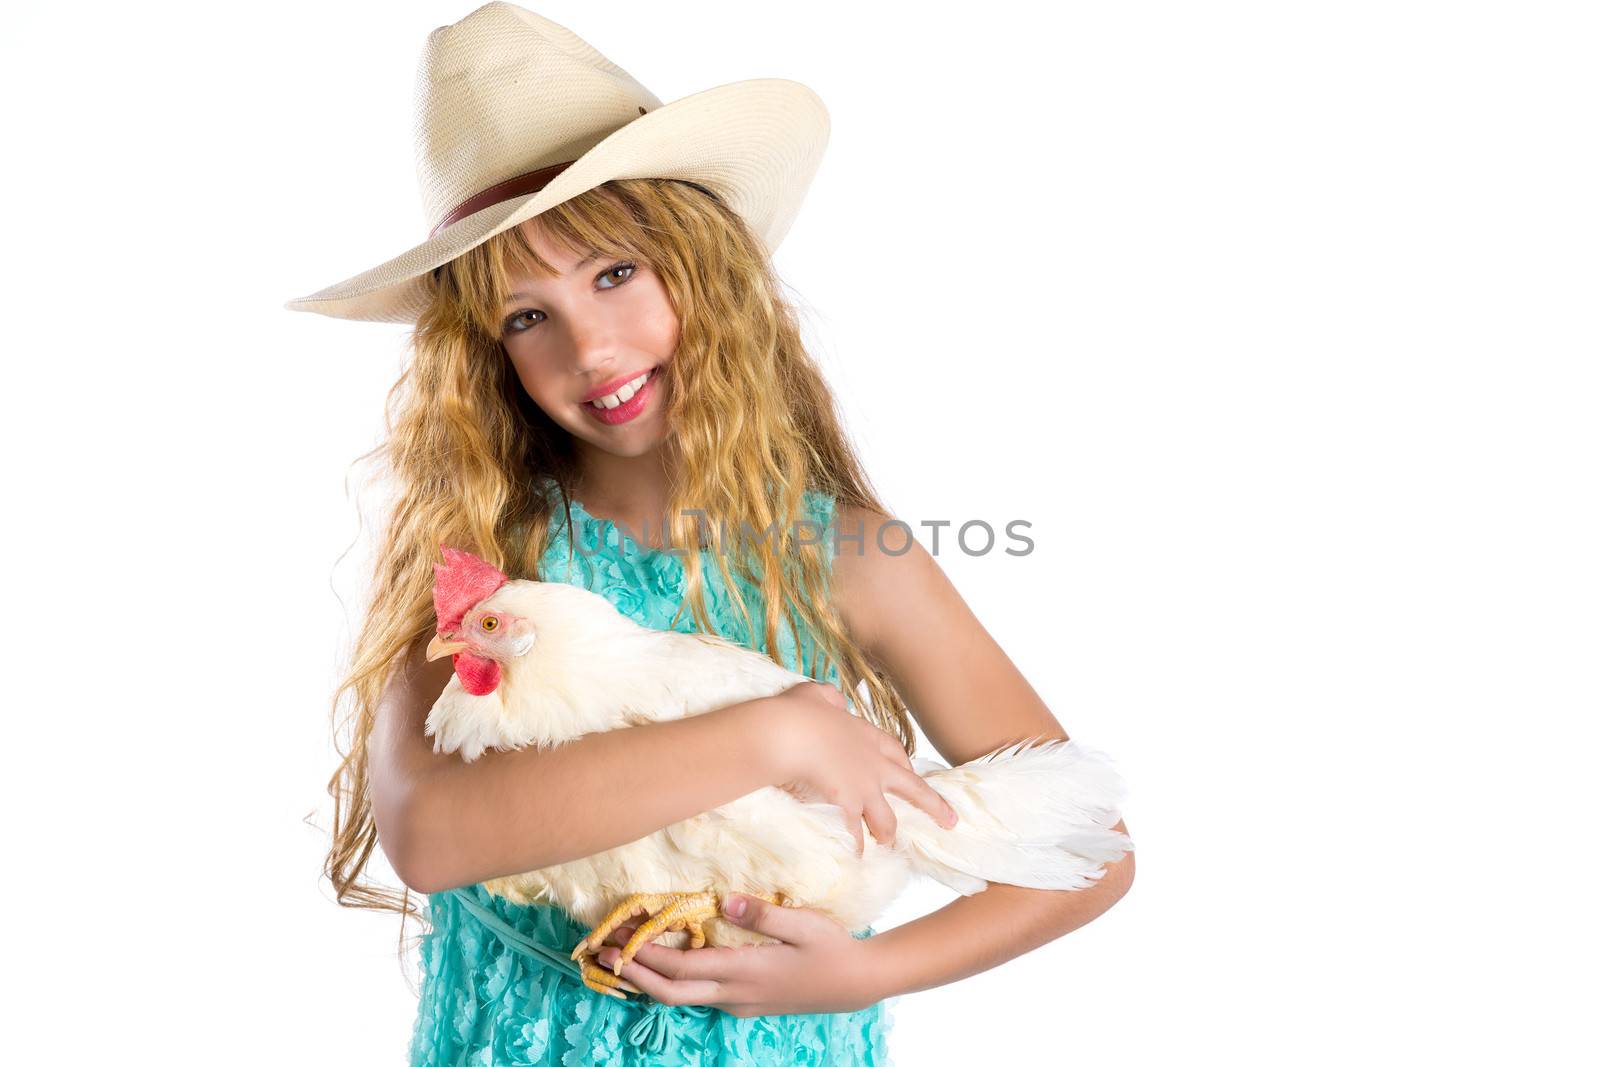 Blond kid girl farmer holding white hen on arms by lunamarina